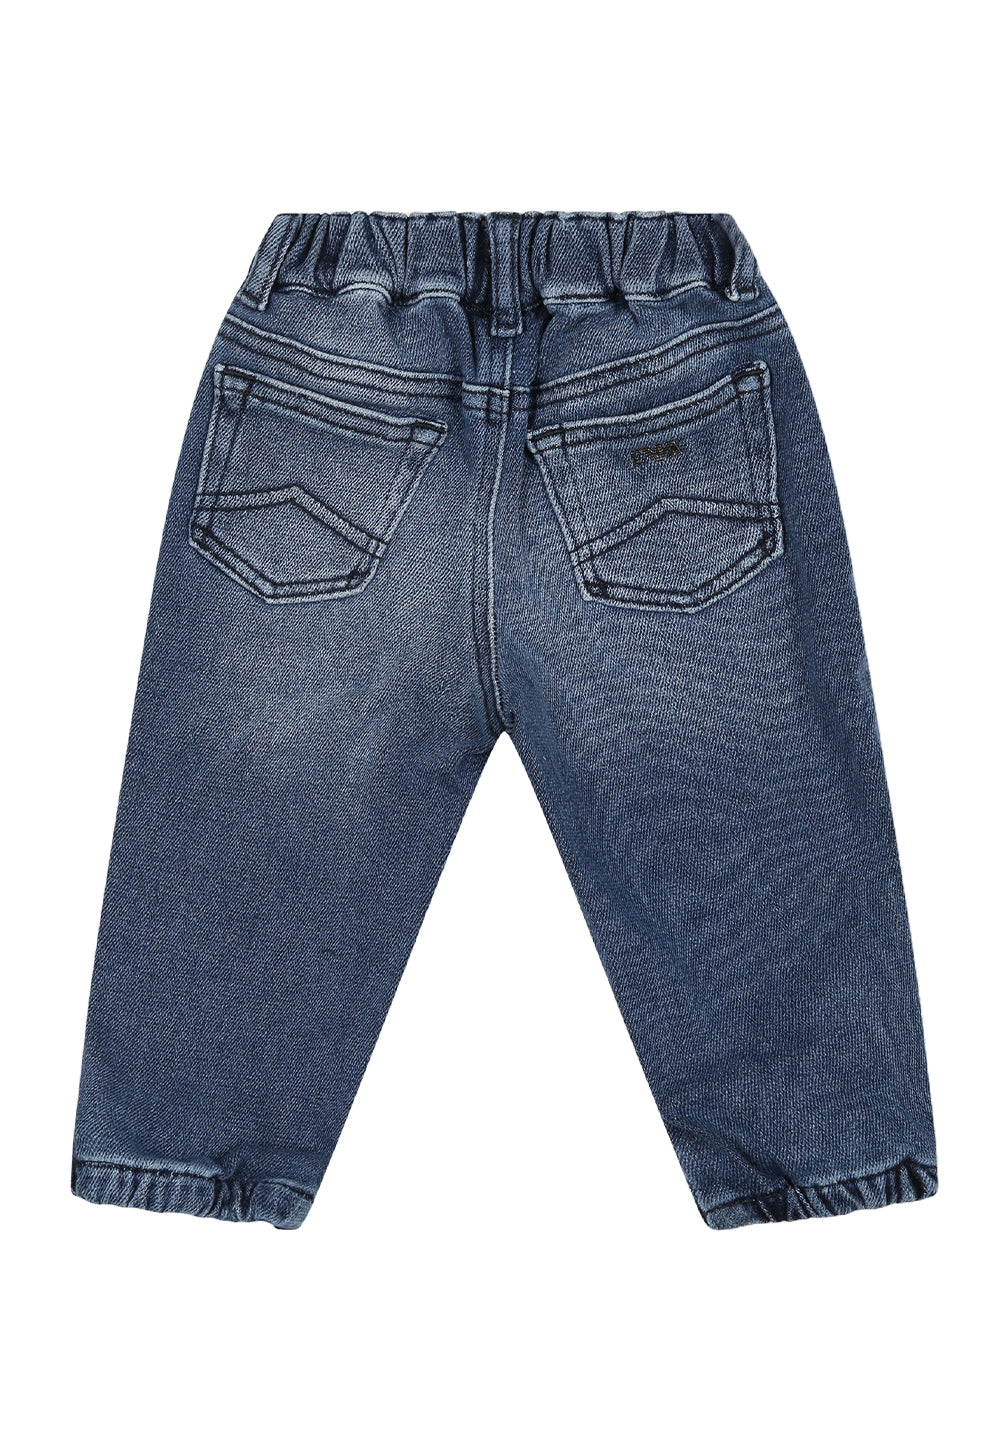 Blue denim jeans for newborns